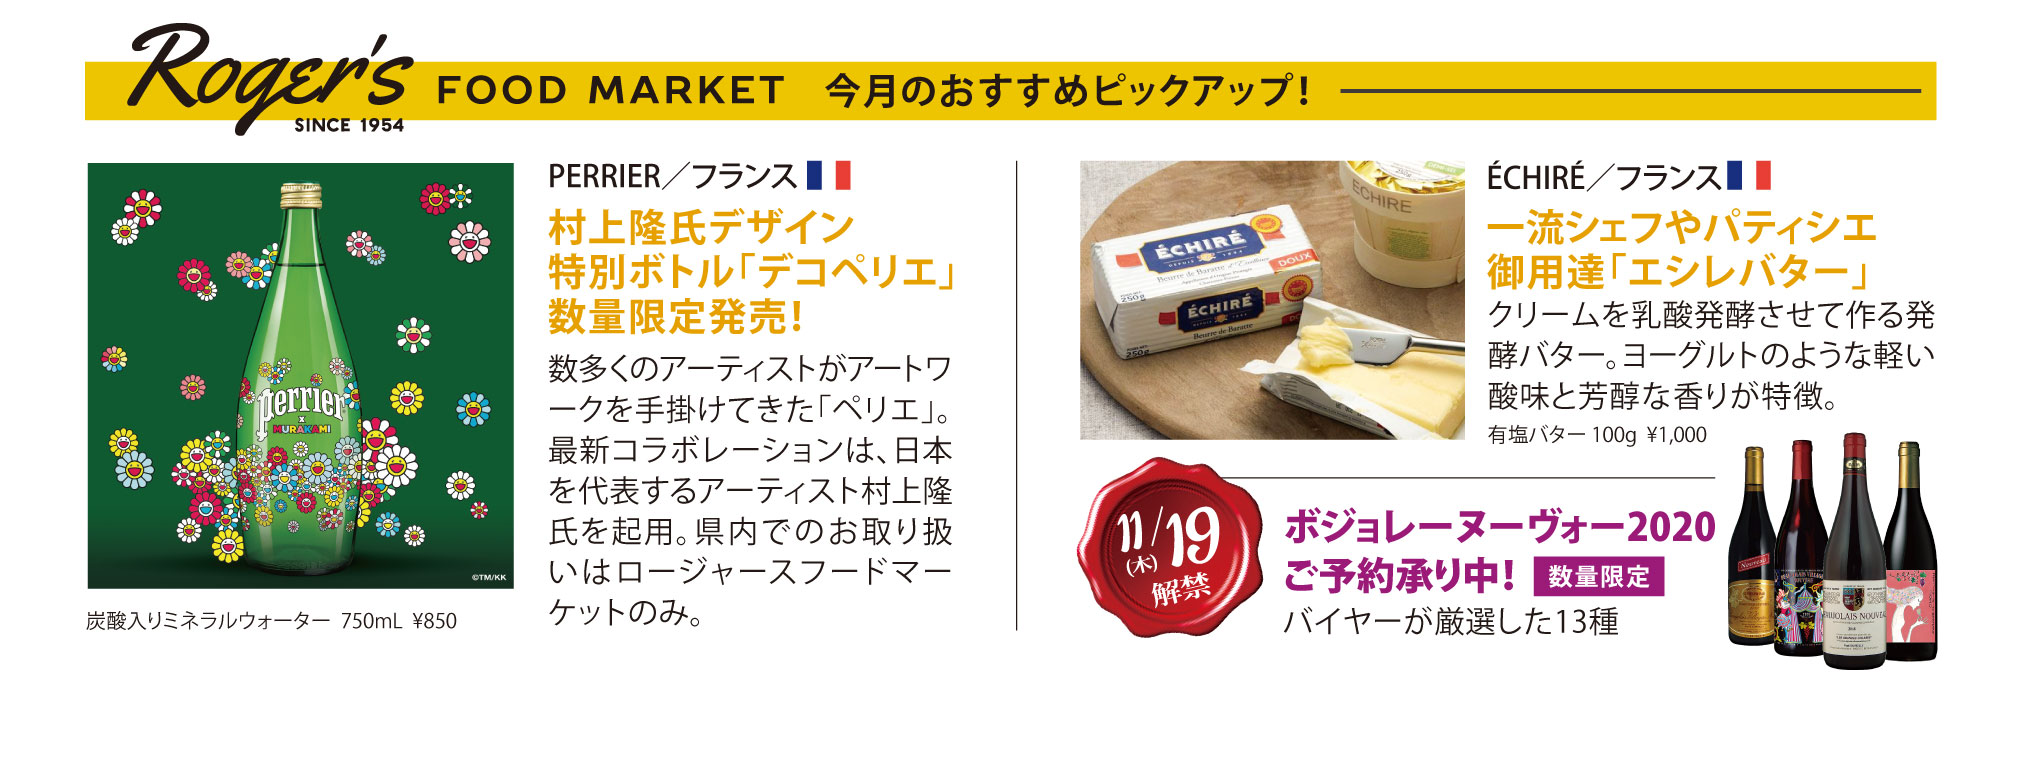 FOOD MARKET今月のおすすめピックUP 村上隆氏デザインボトル「デコペリエ」数量限定発売！<br />
